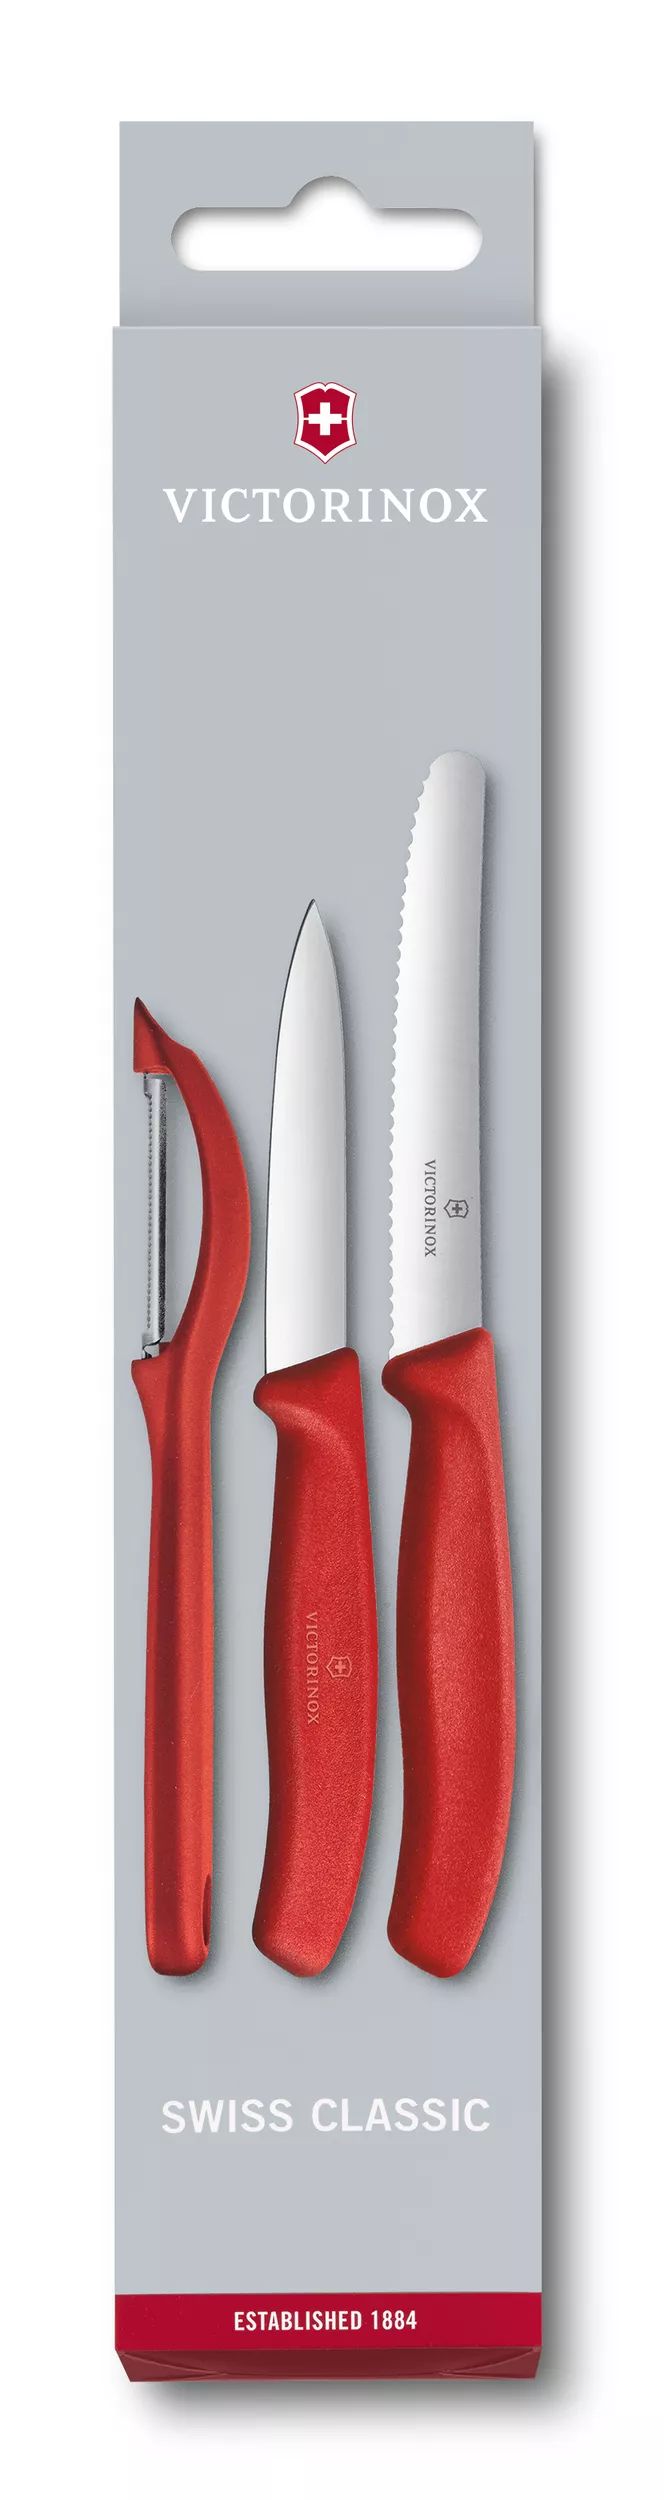 Set di coltelli per verdura Swiss Classic con pelaverdure, 3 pezzi-6.7111.31